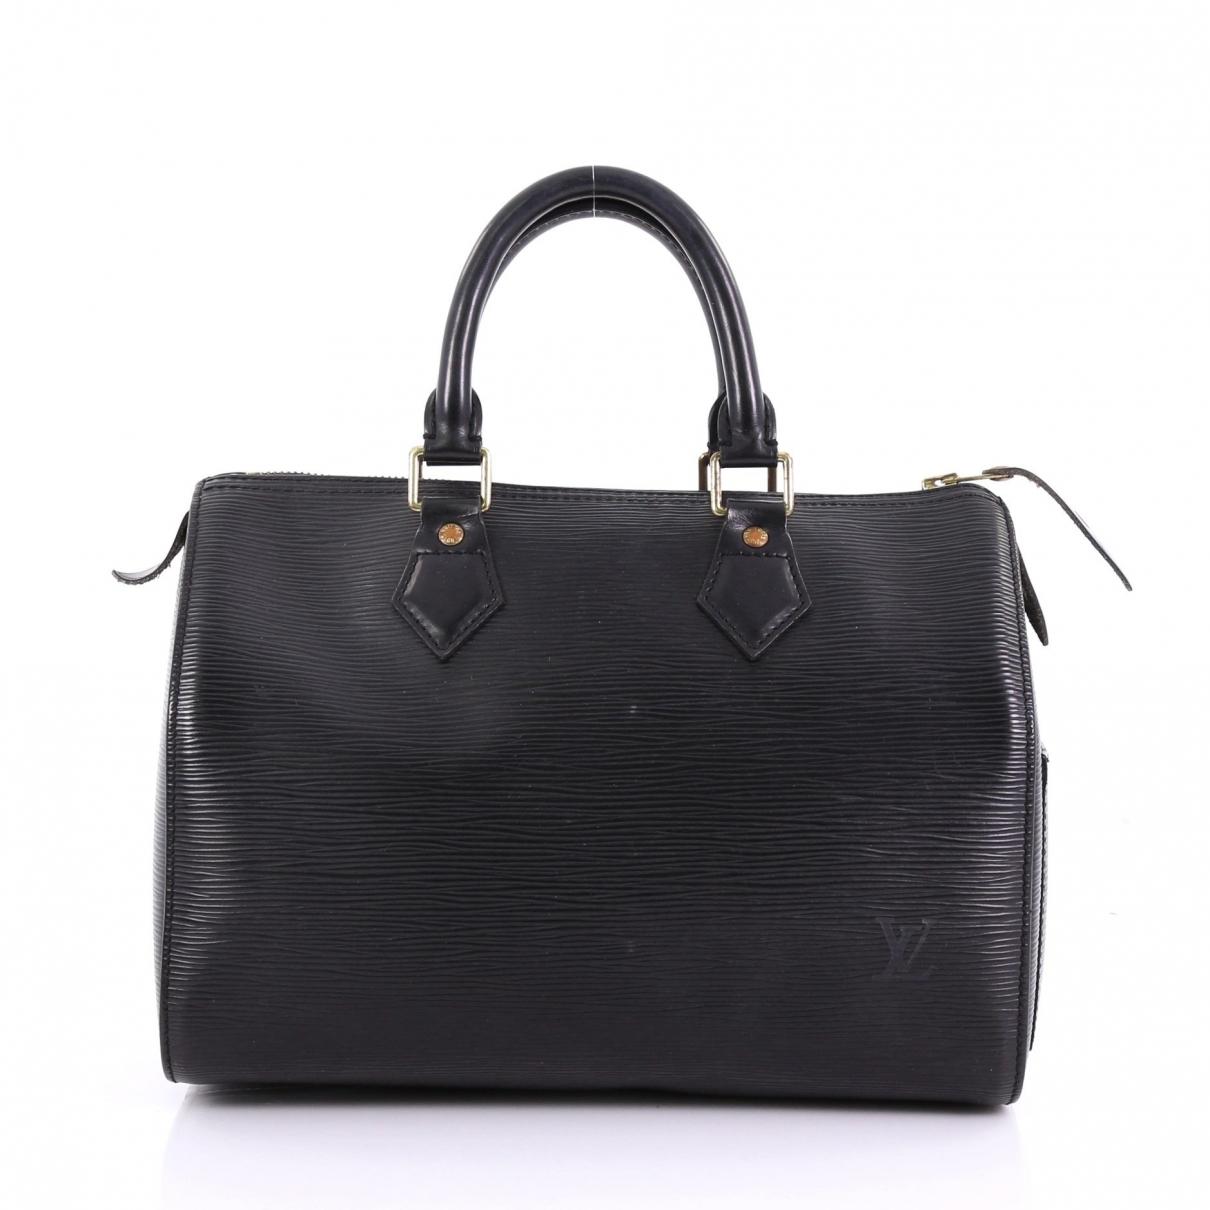 Louis Vuitton Speedy Leather Handbag in Black - Lyst